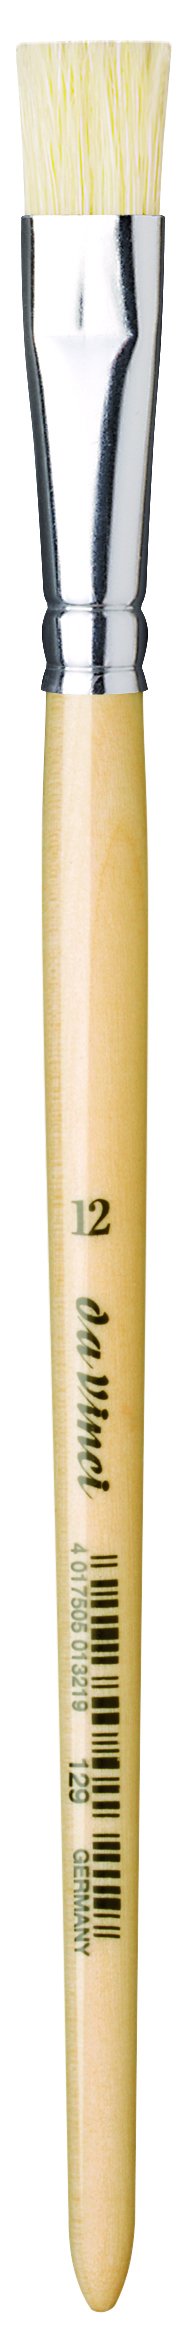 Pennelli Da Vinci Junior borste punta piatta setola sintetica n.12